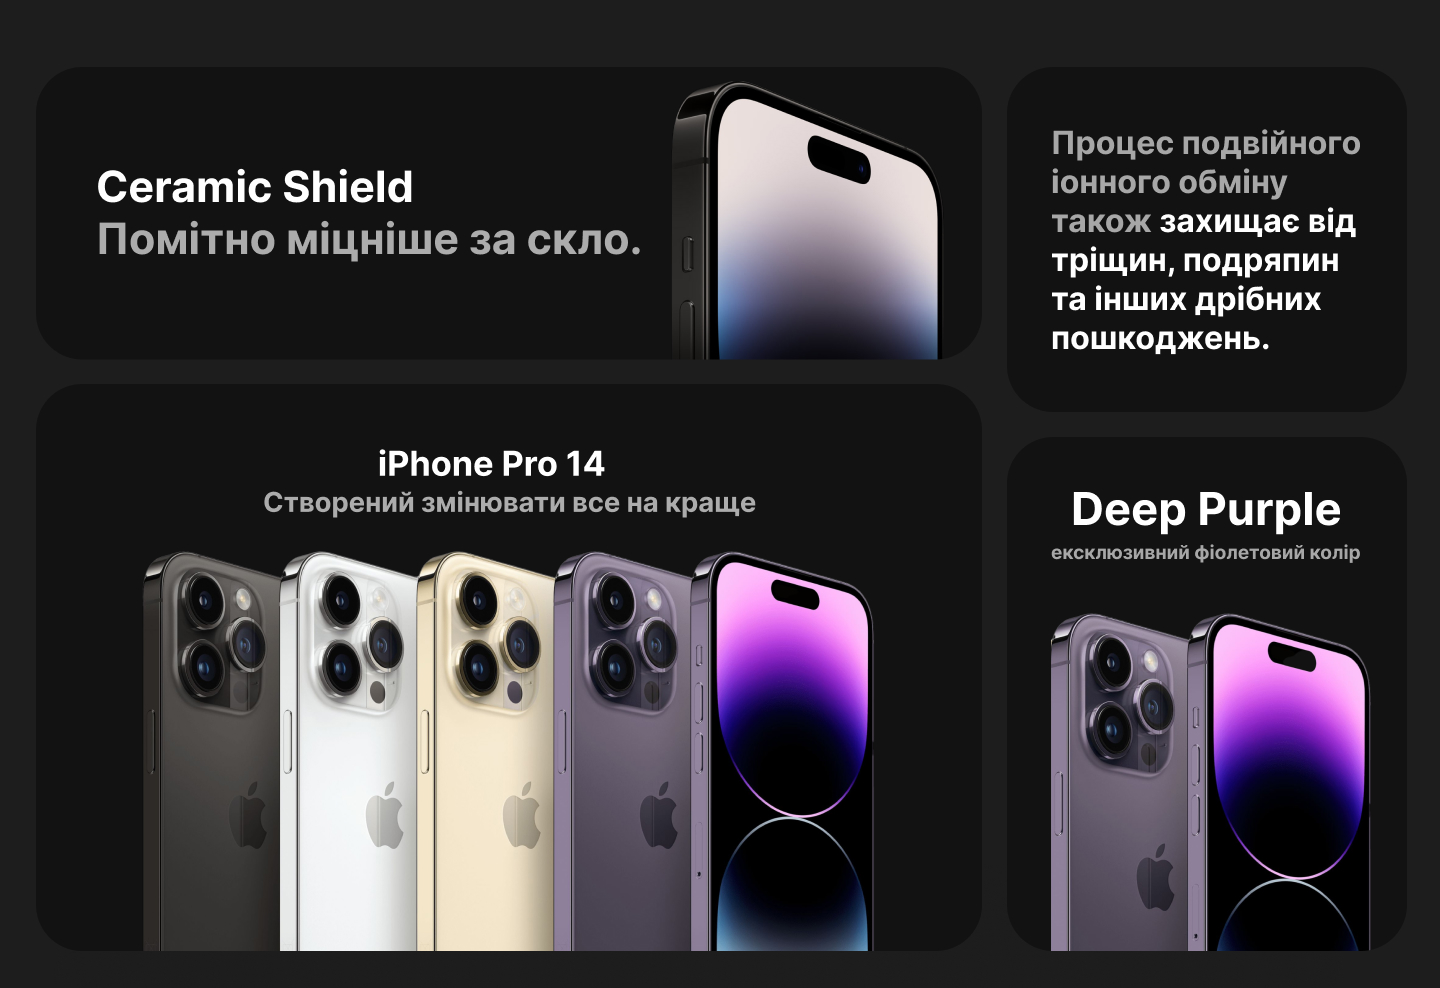 Apple iPhone 14 Pro 1TB (Space Black)